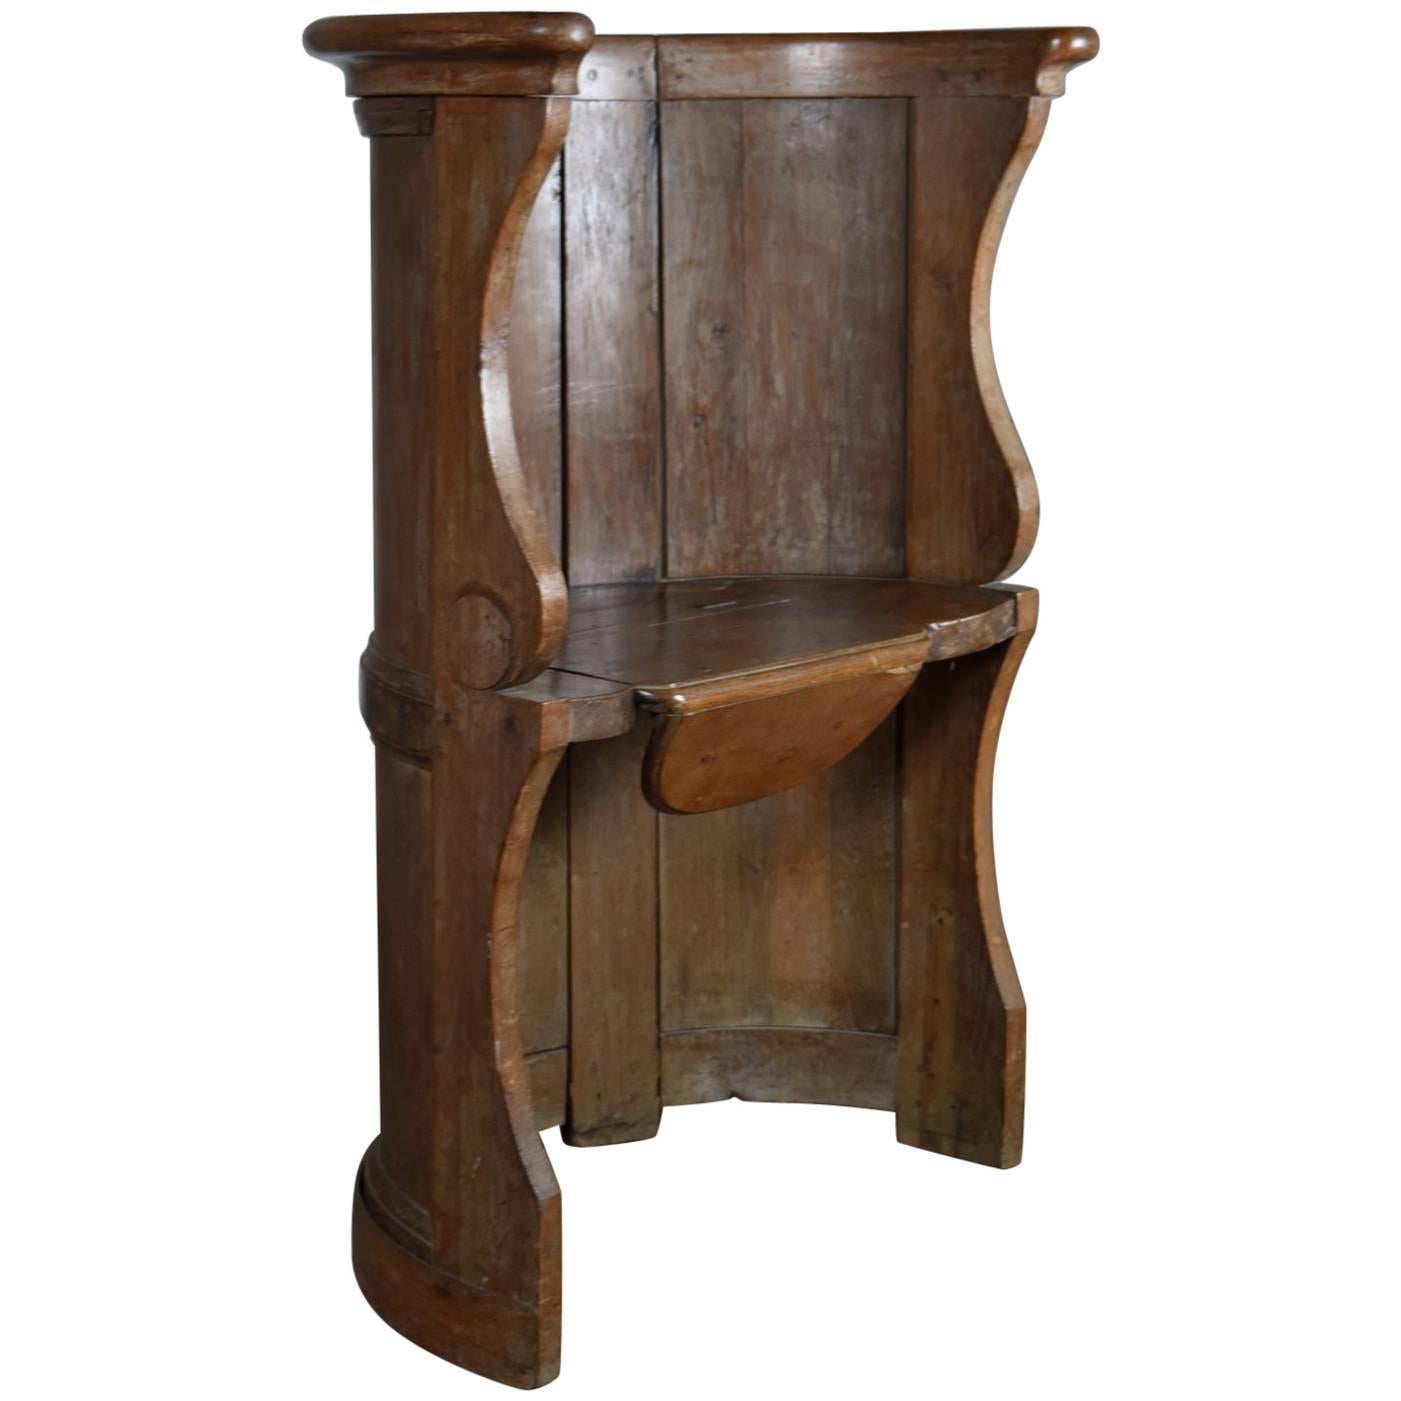 French 16th Century early Baroque Oak Barrel-Back Seat